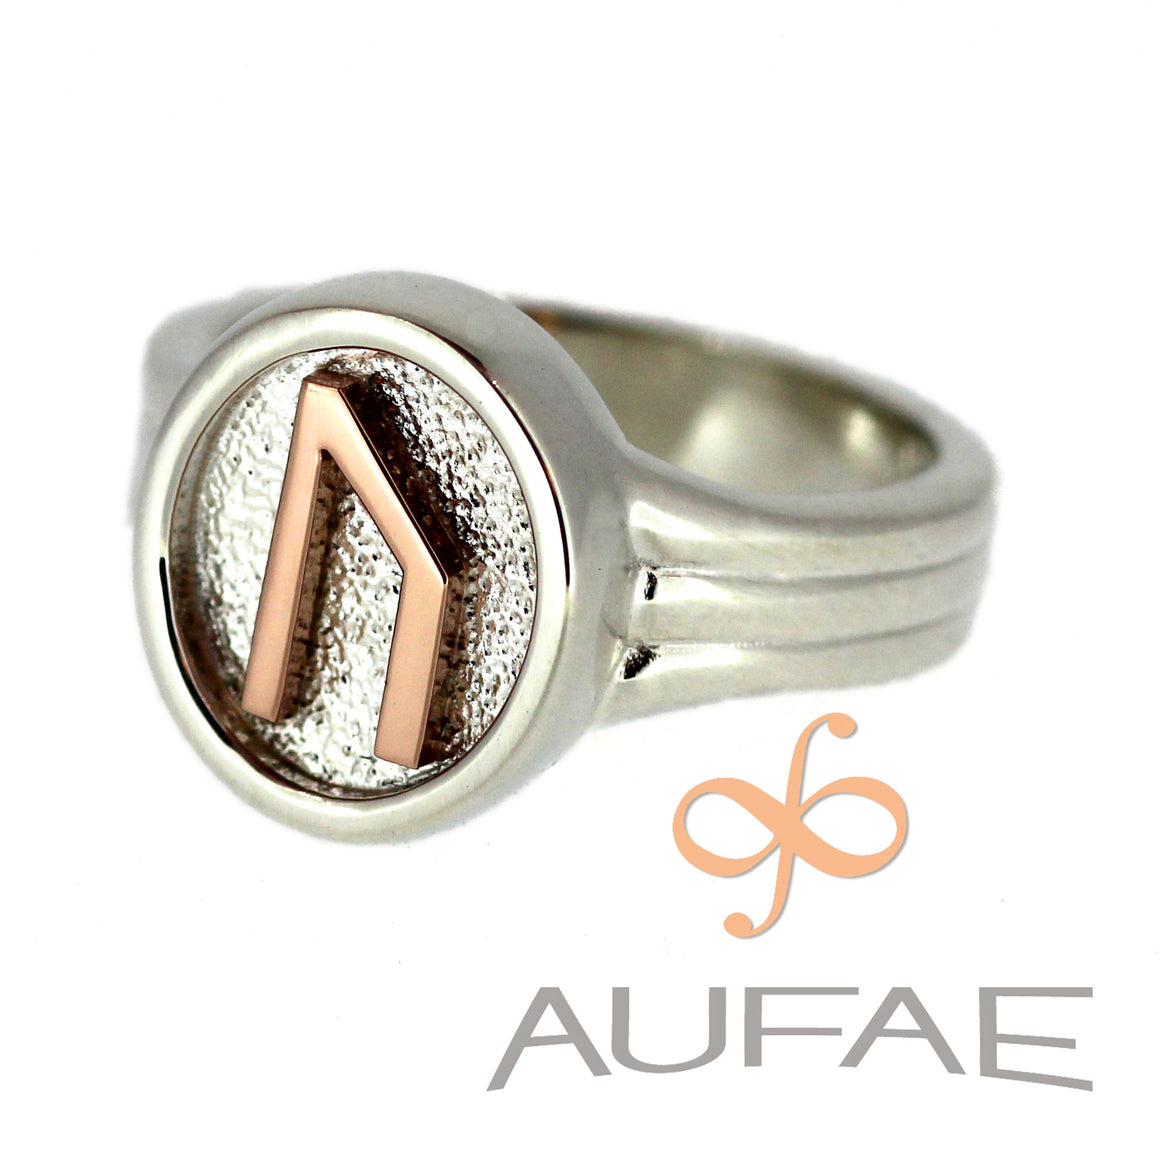 Aufae Uruz Rune Ring in Sterling Silver with 14K Rose Gold Uruz Rune